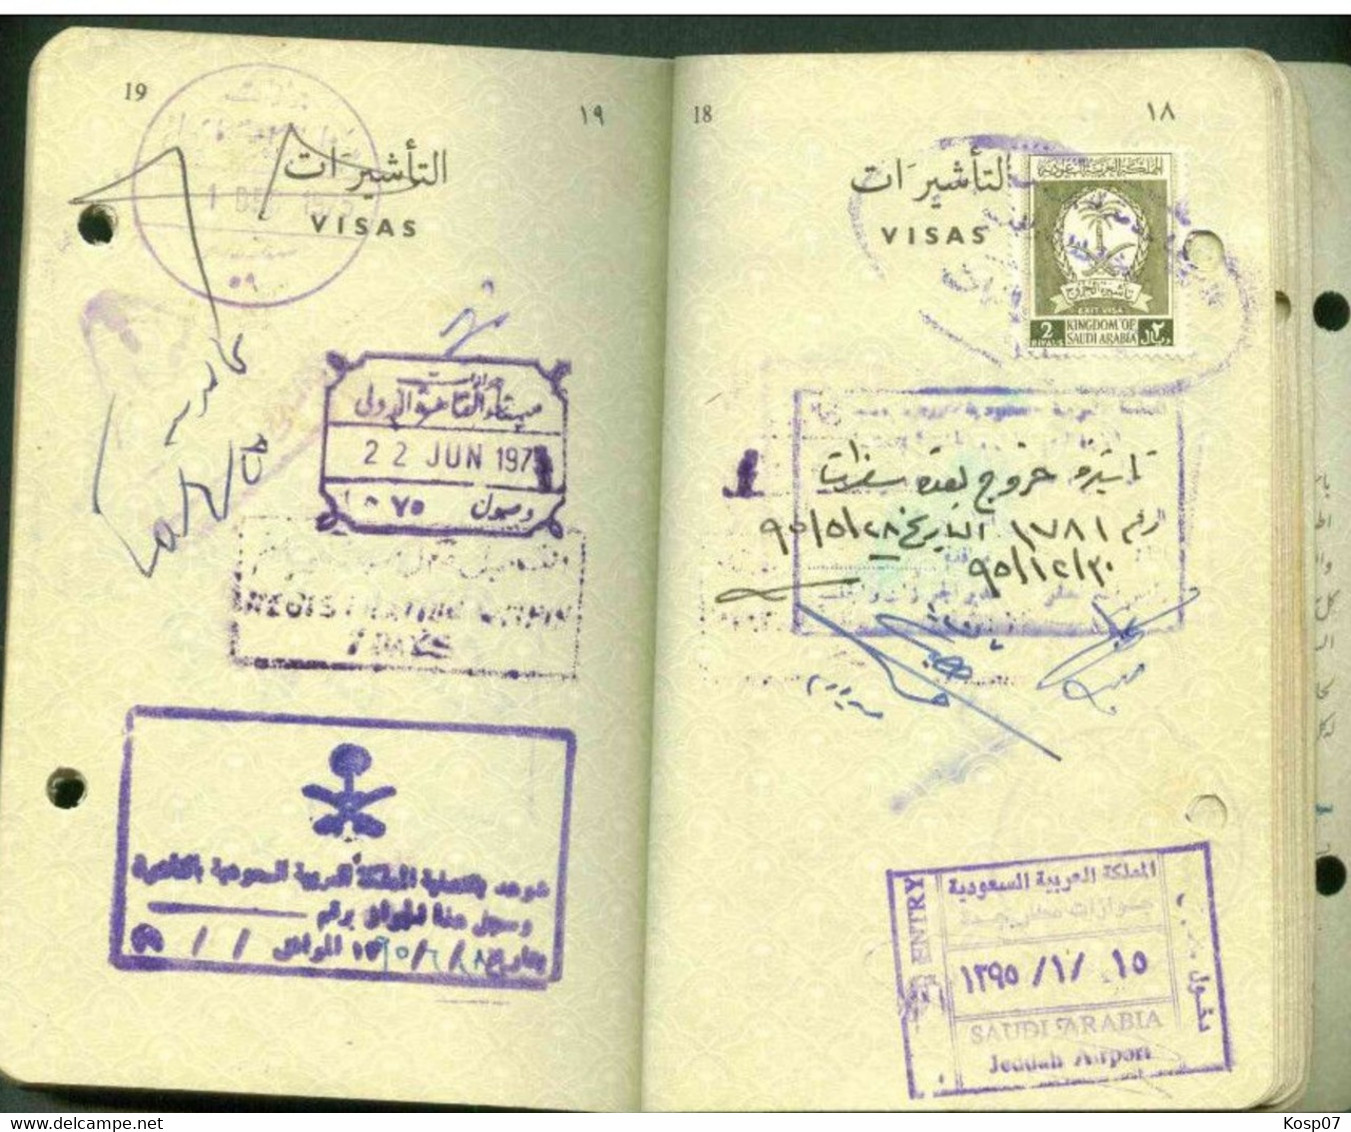 Saudi Arabia passport 1973 many visas and revenue stamps